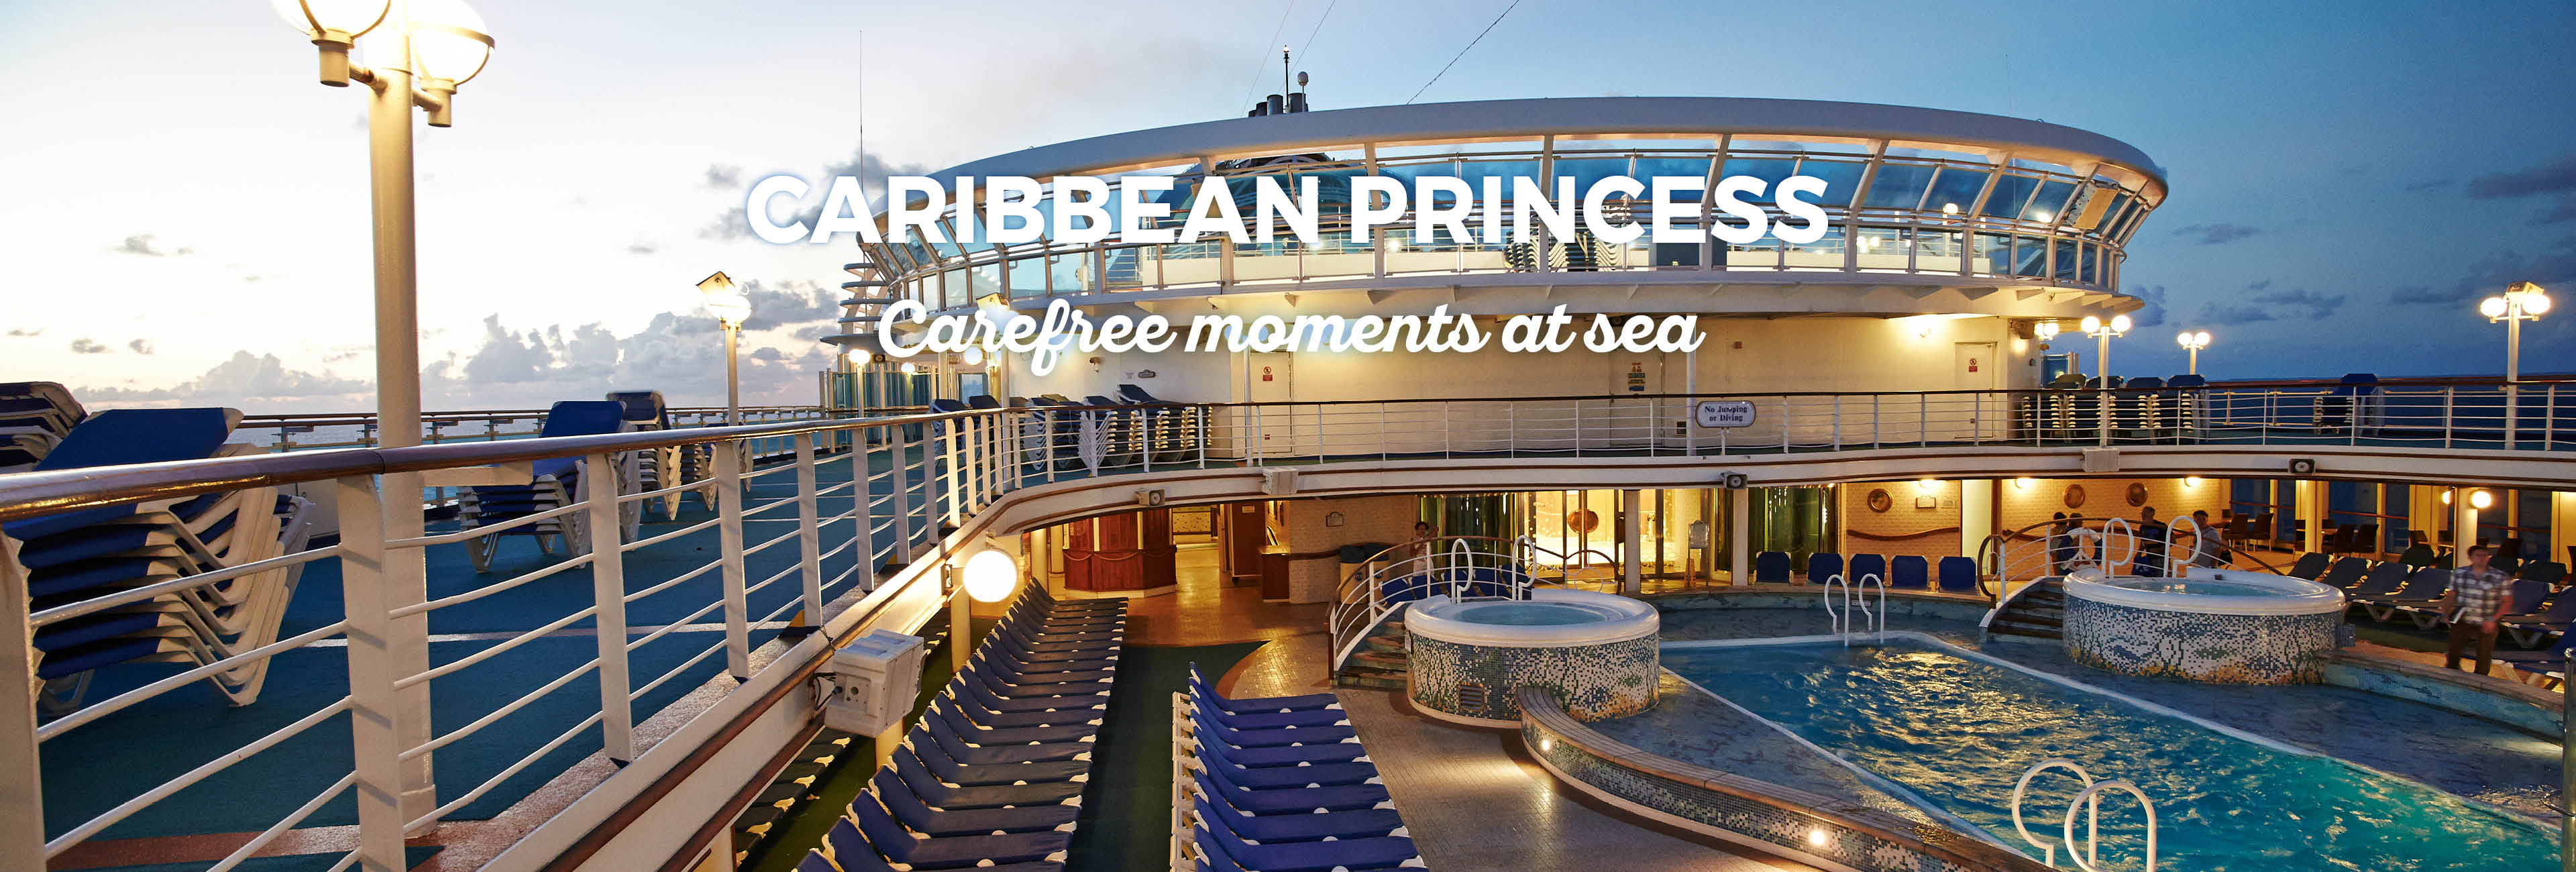 caribbean-princess-1.jpg